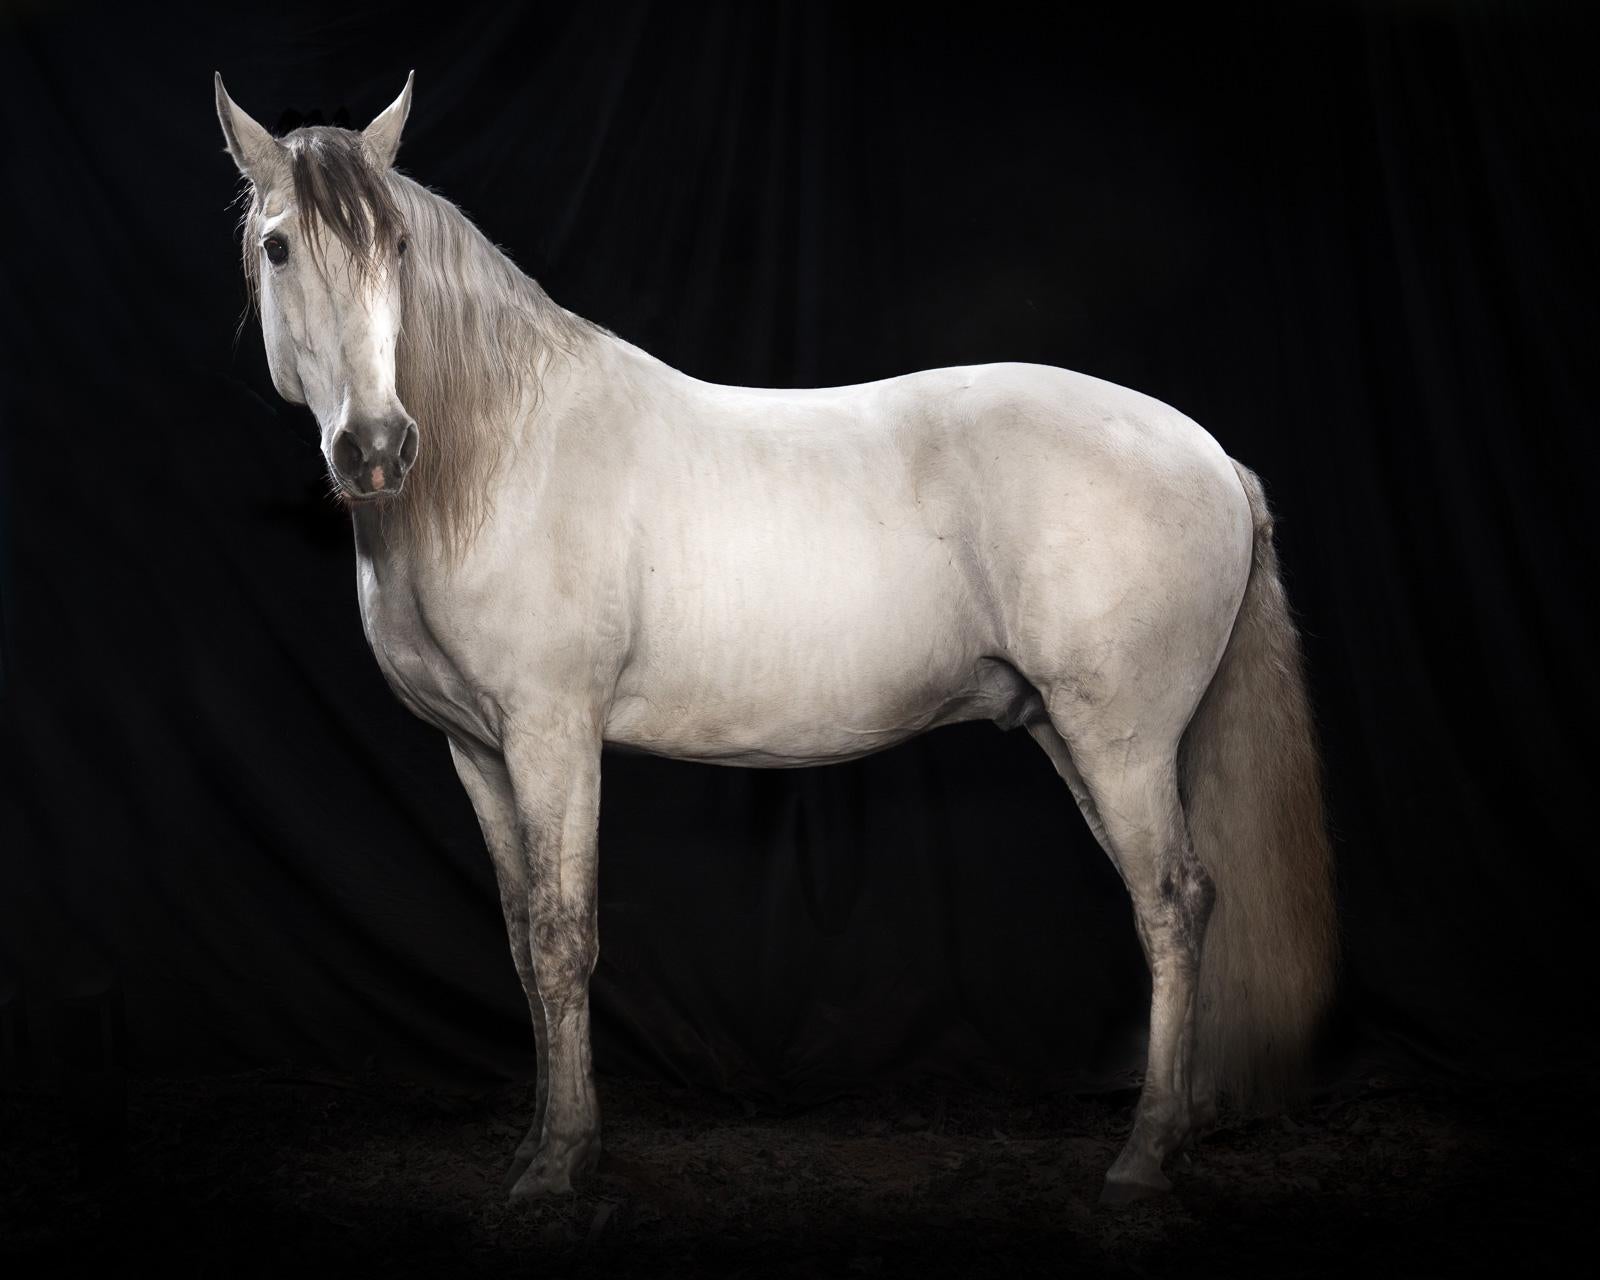 Tim Platt Color Photograph - "Ehpico d’ Atela” pure bred Lusitano stallion #5 - Signed limited edition print